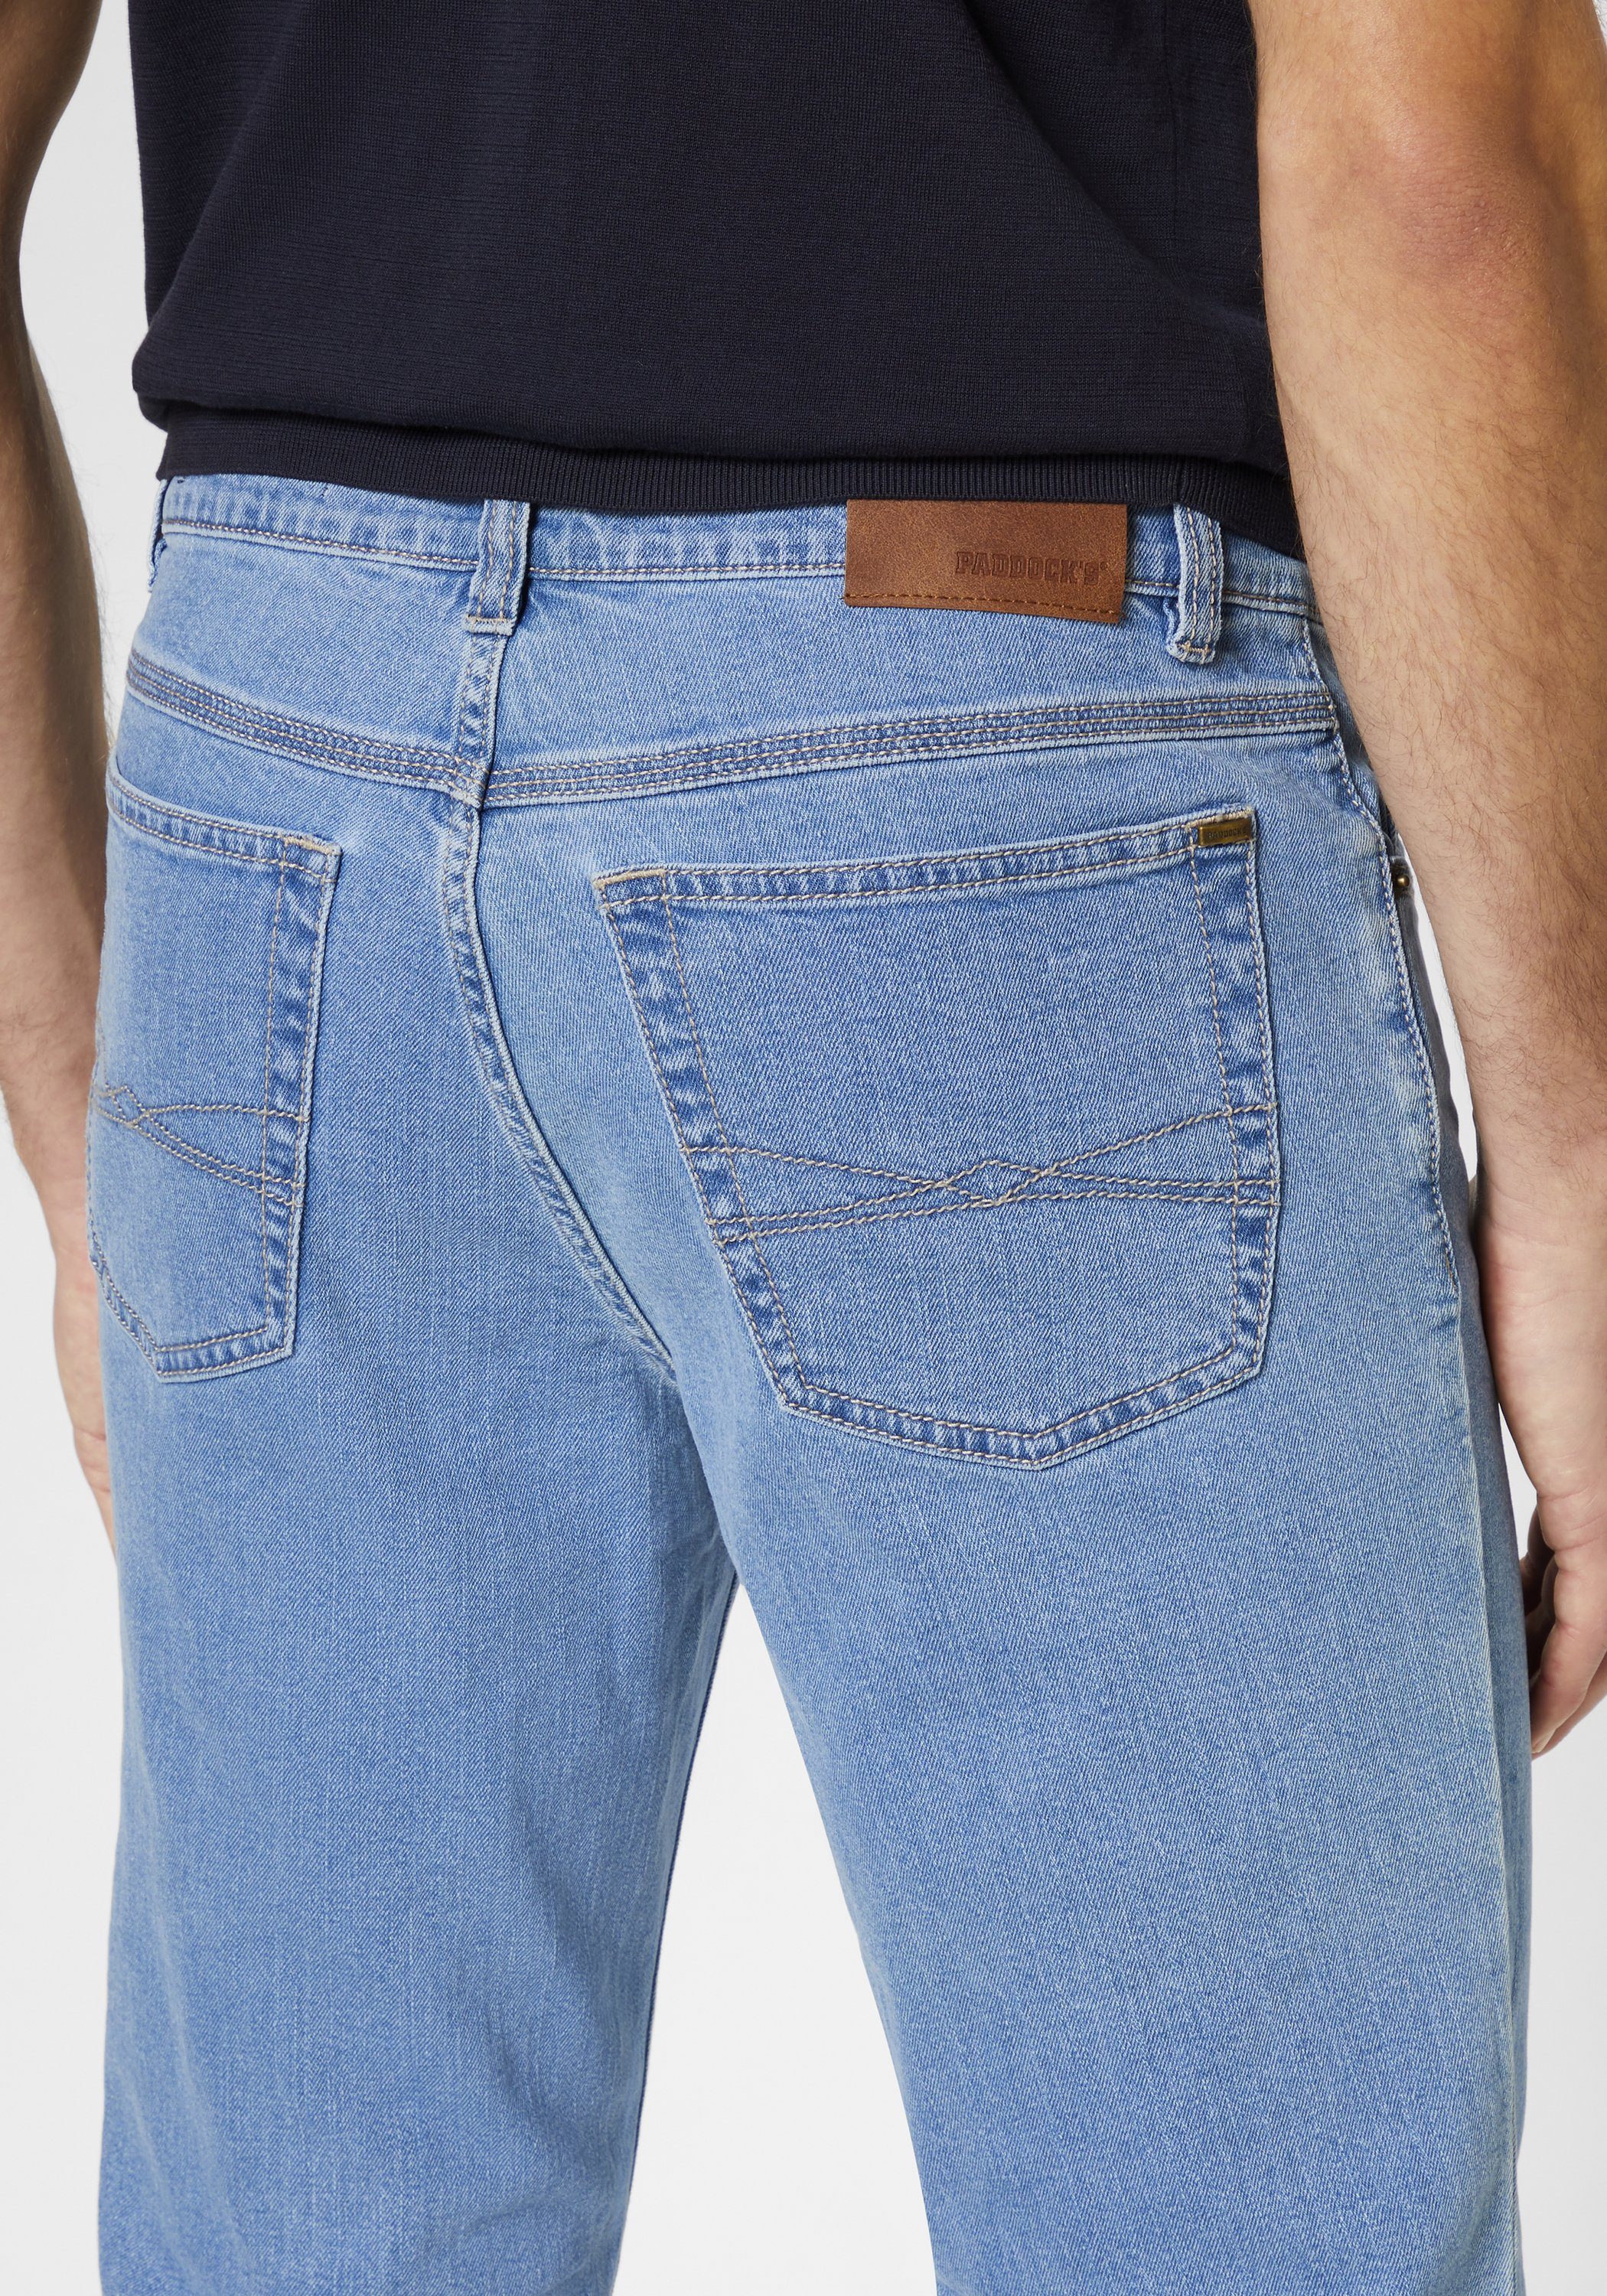 Jeans Slim-Fit PIPE Paddock's Elastische Slim-fit-Jeans light PIPE blue